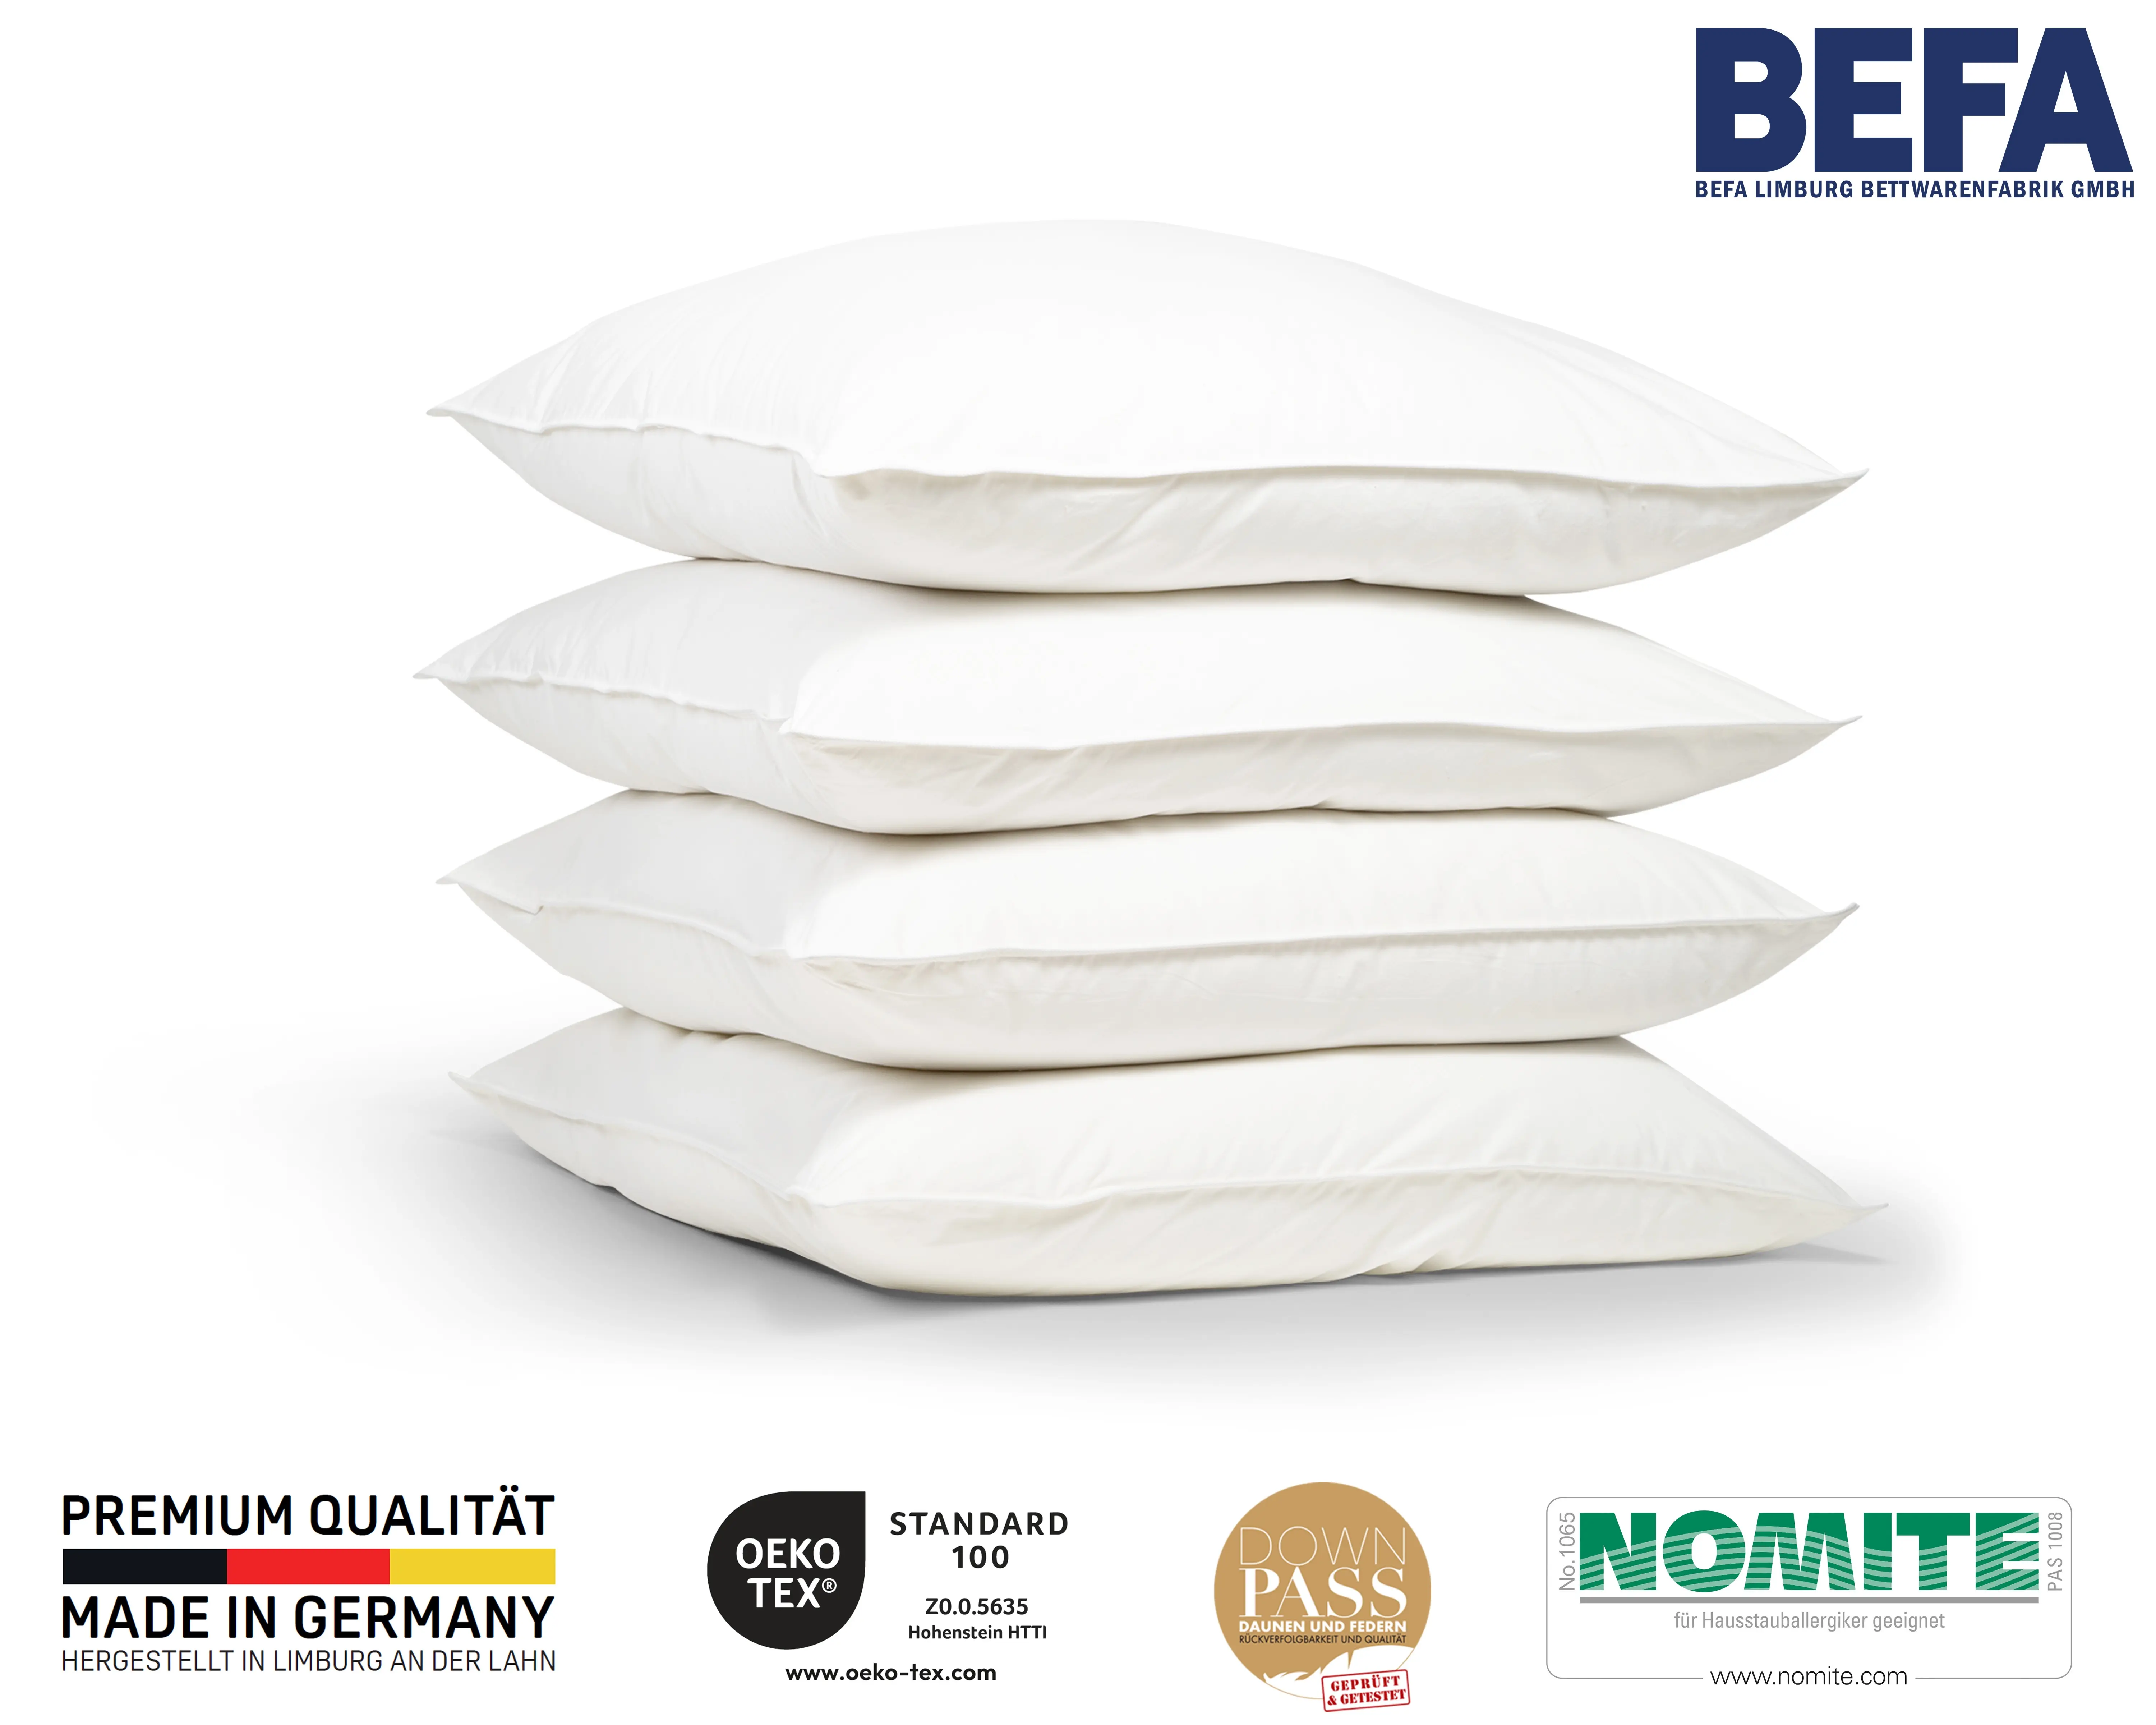 Penjualan mewah terbaik putih 3 ruang bantal bulu angsa 90% Bawah 60x80cm untuk tidur buatan Jerman